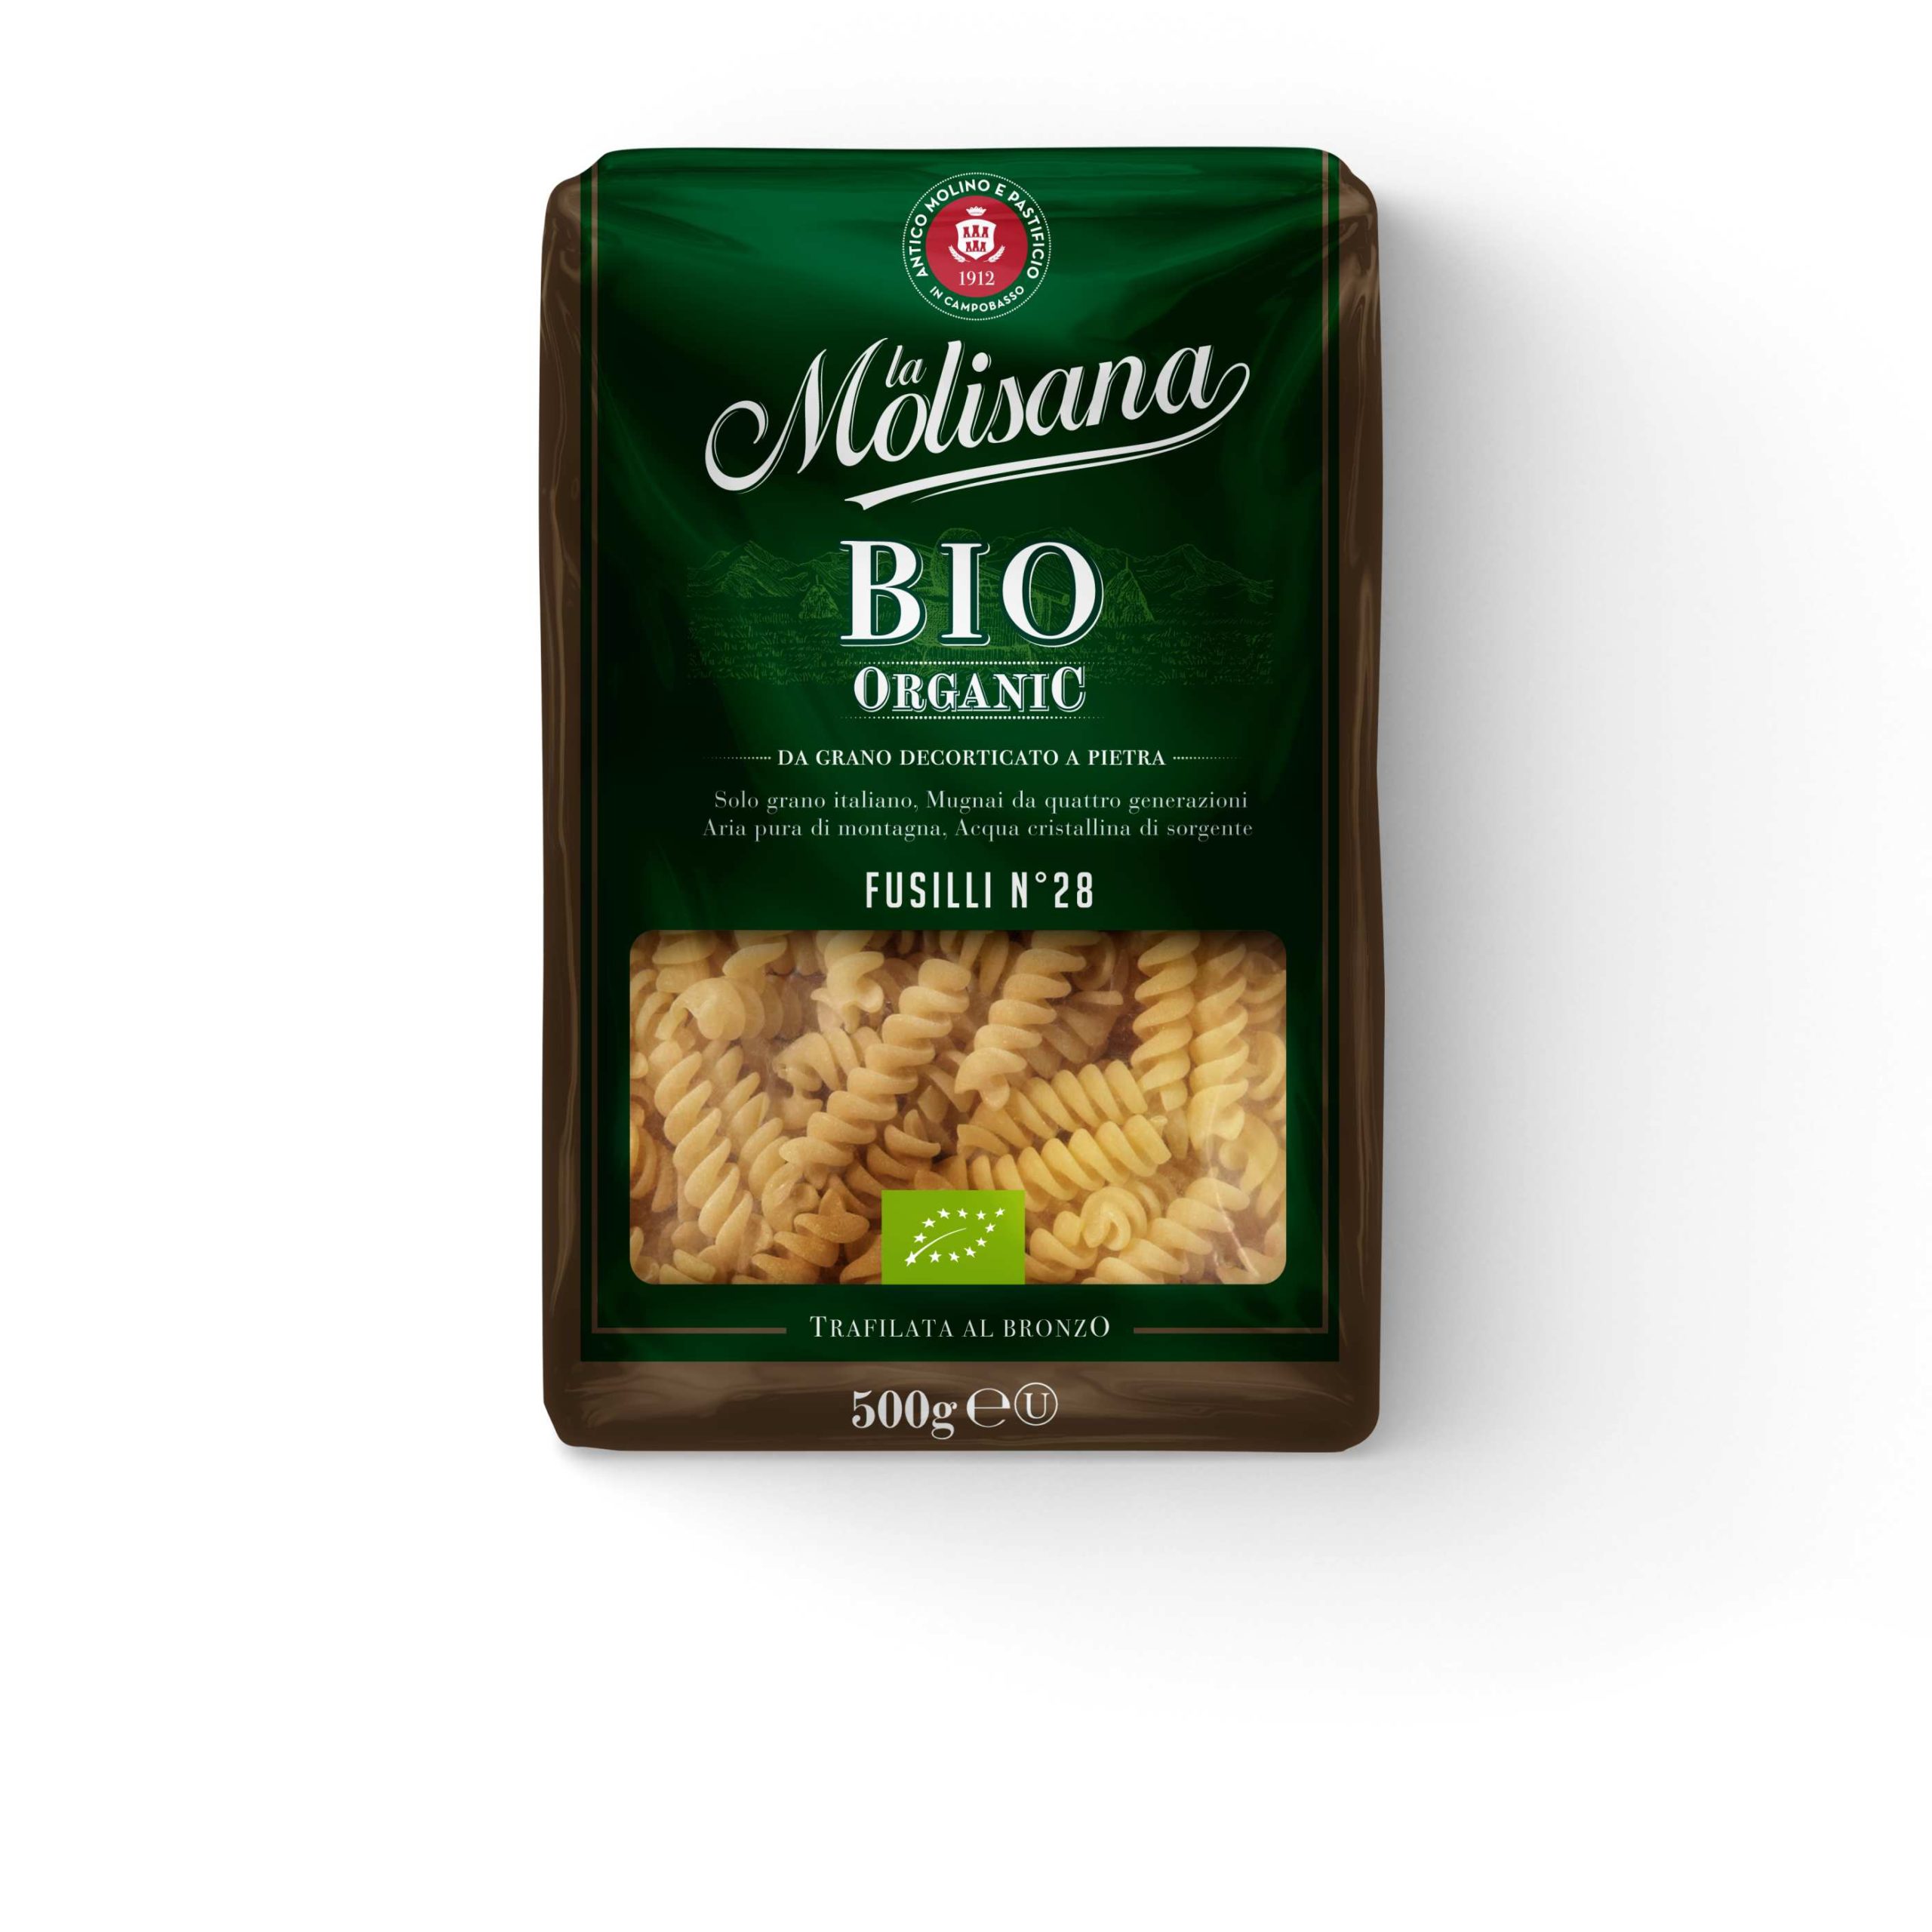 Bio Organic Fusilli Pasta - La Molisana - 500gm